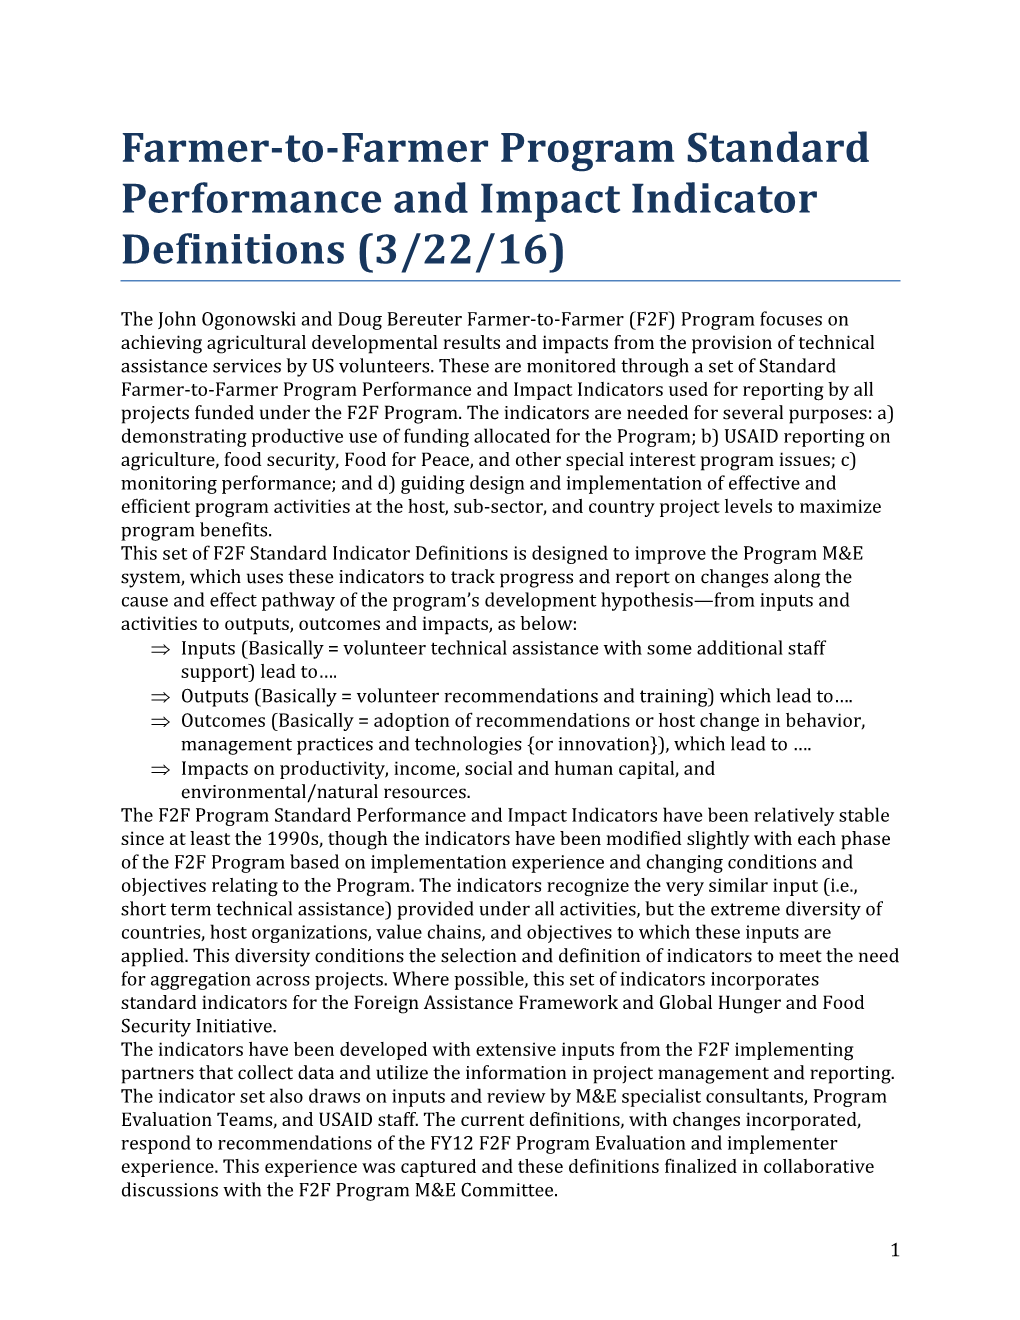 Farmer-To-Farmer Program Standard Performance and Impact Indicator Definitions (3/22/16)